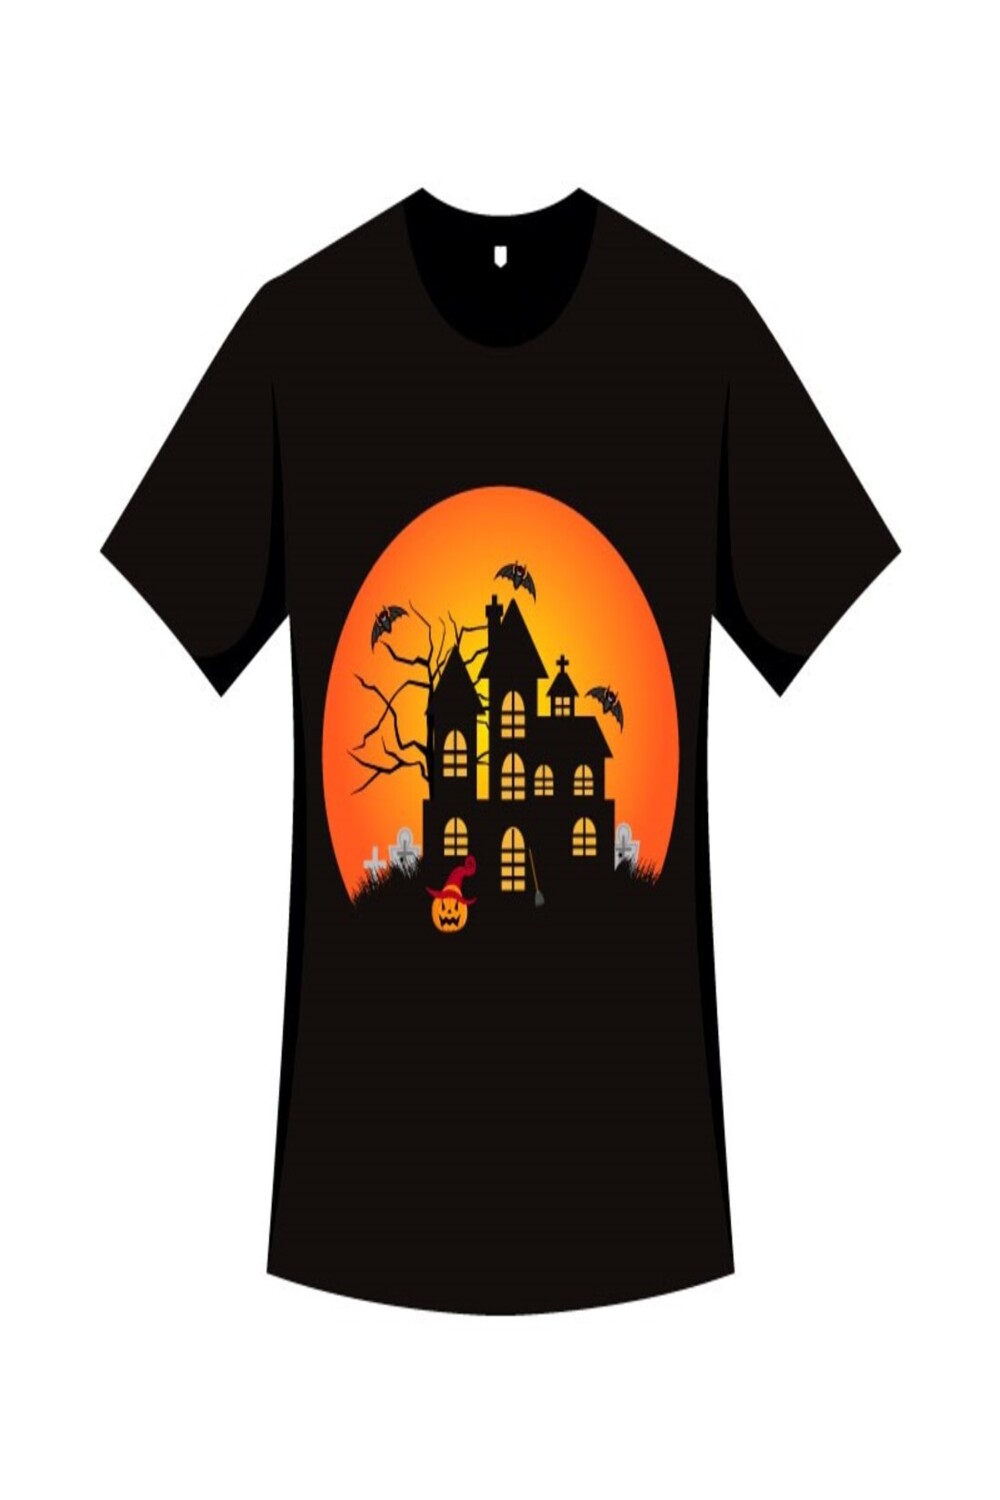 T-shirt Vector Design for Halloween pinterest image.